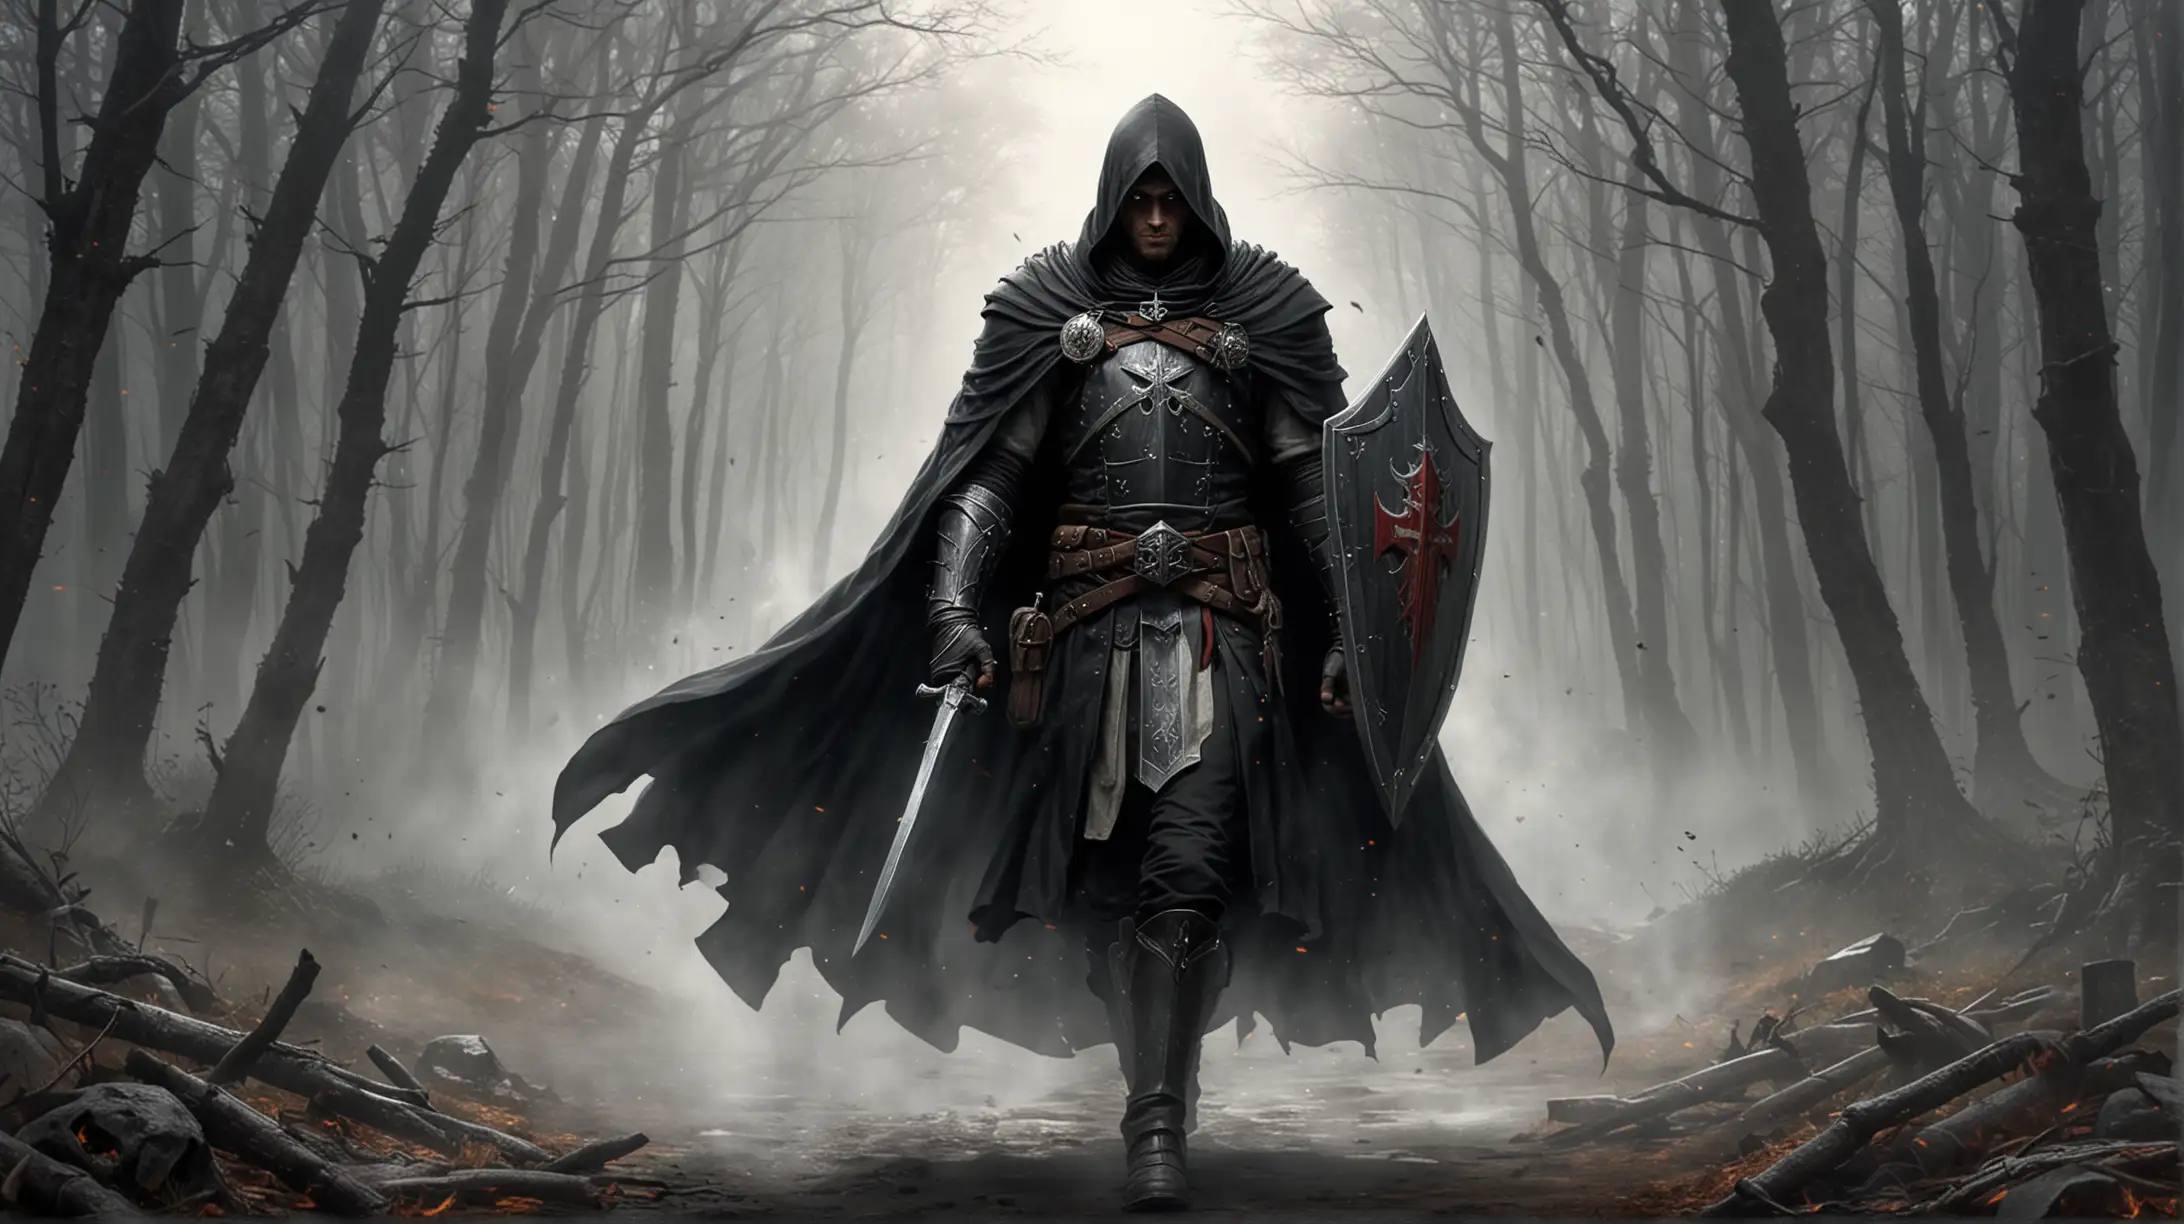 templar, knight, man, epic fantasy, black hooded, cloak, large shield